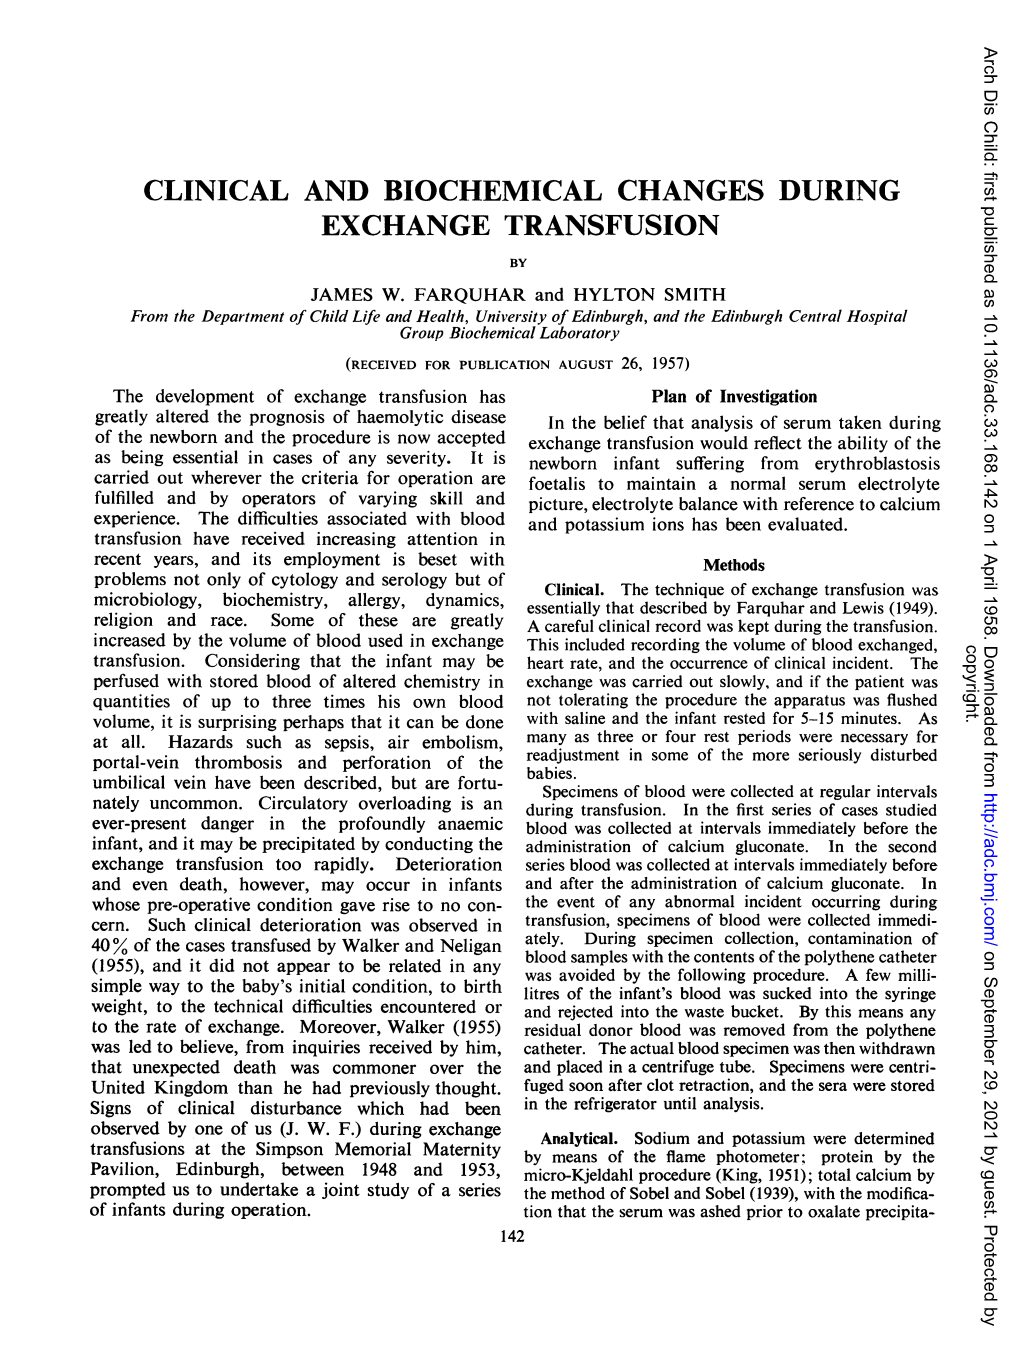 Exchange Transfusion